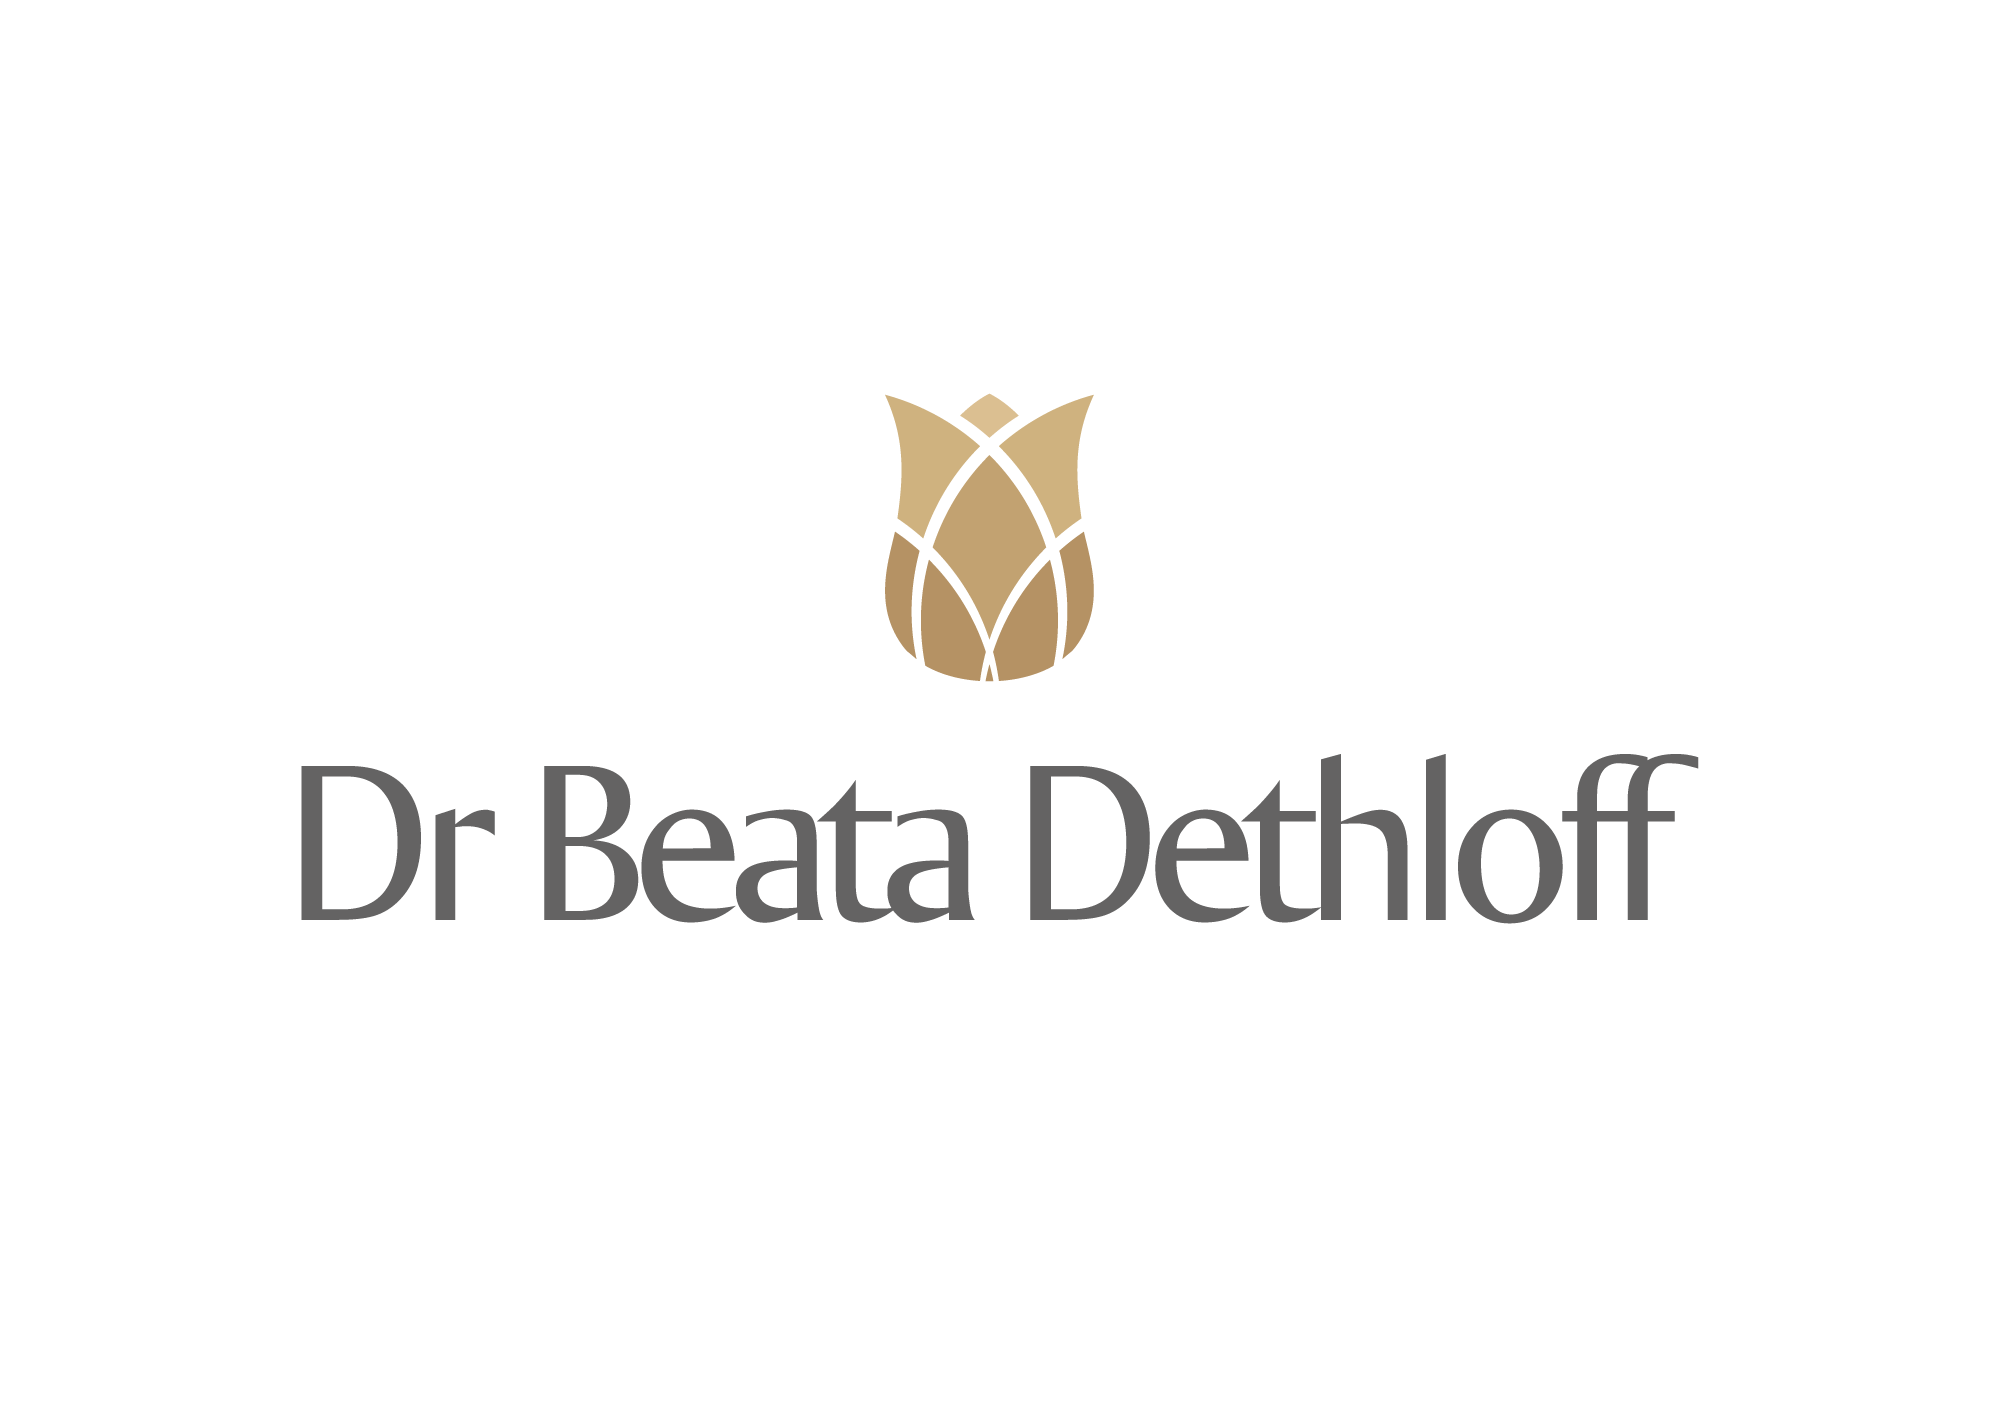 dethloff-logo-png